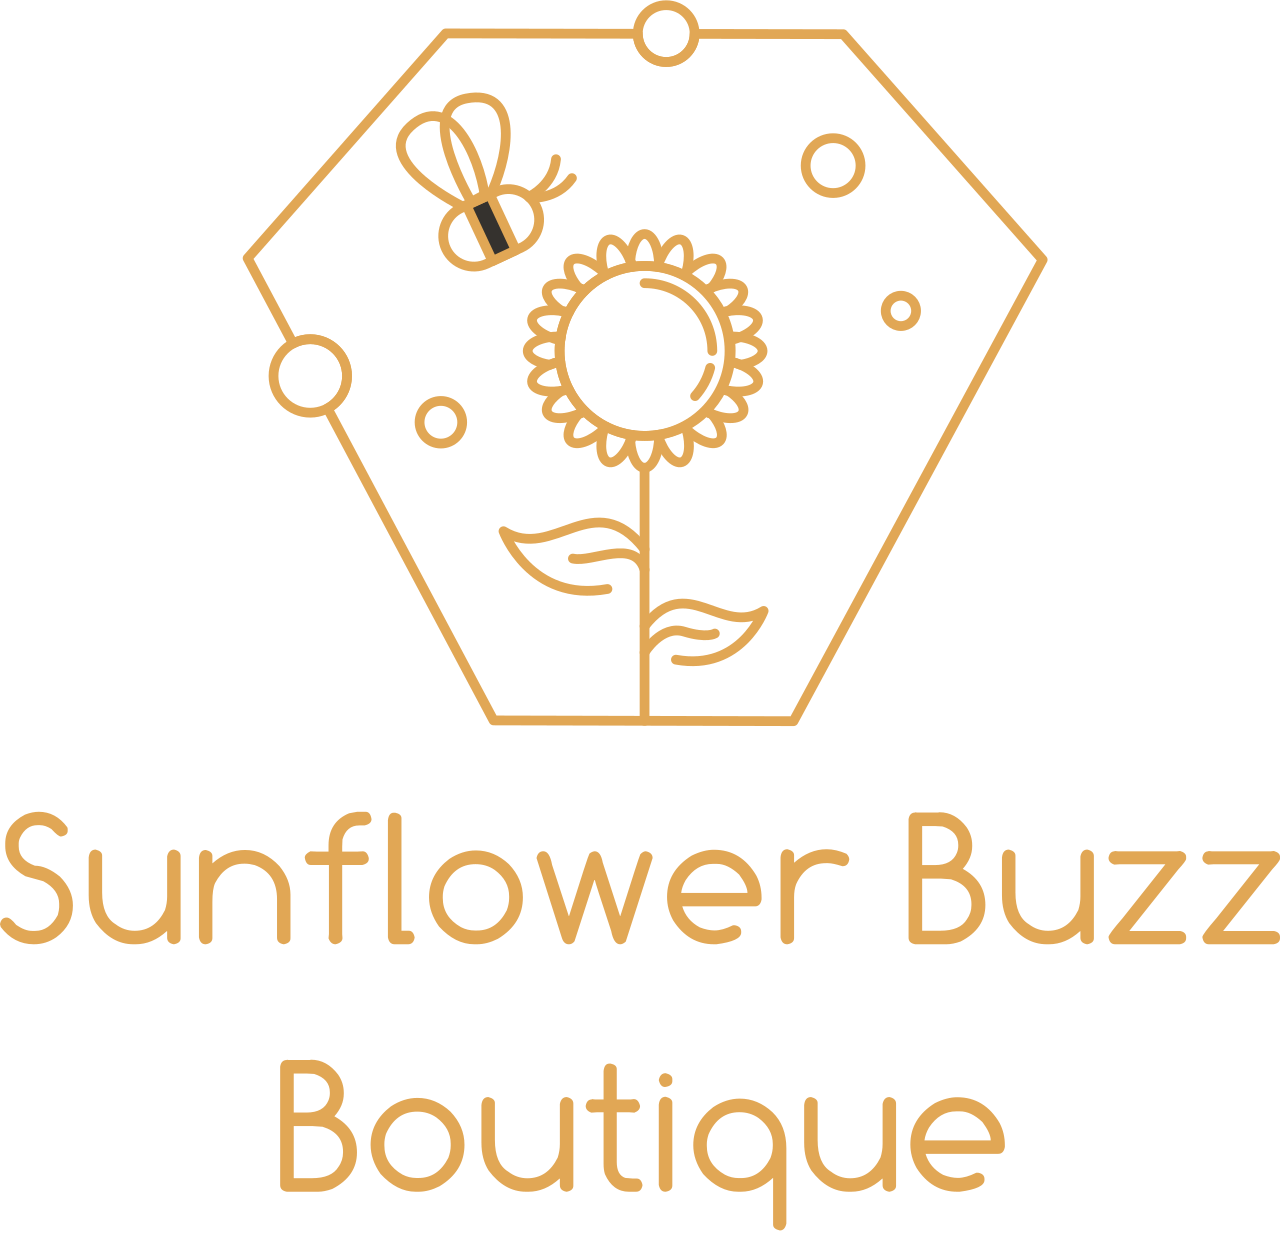 Sunflower Buzz
Boutique's logo